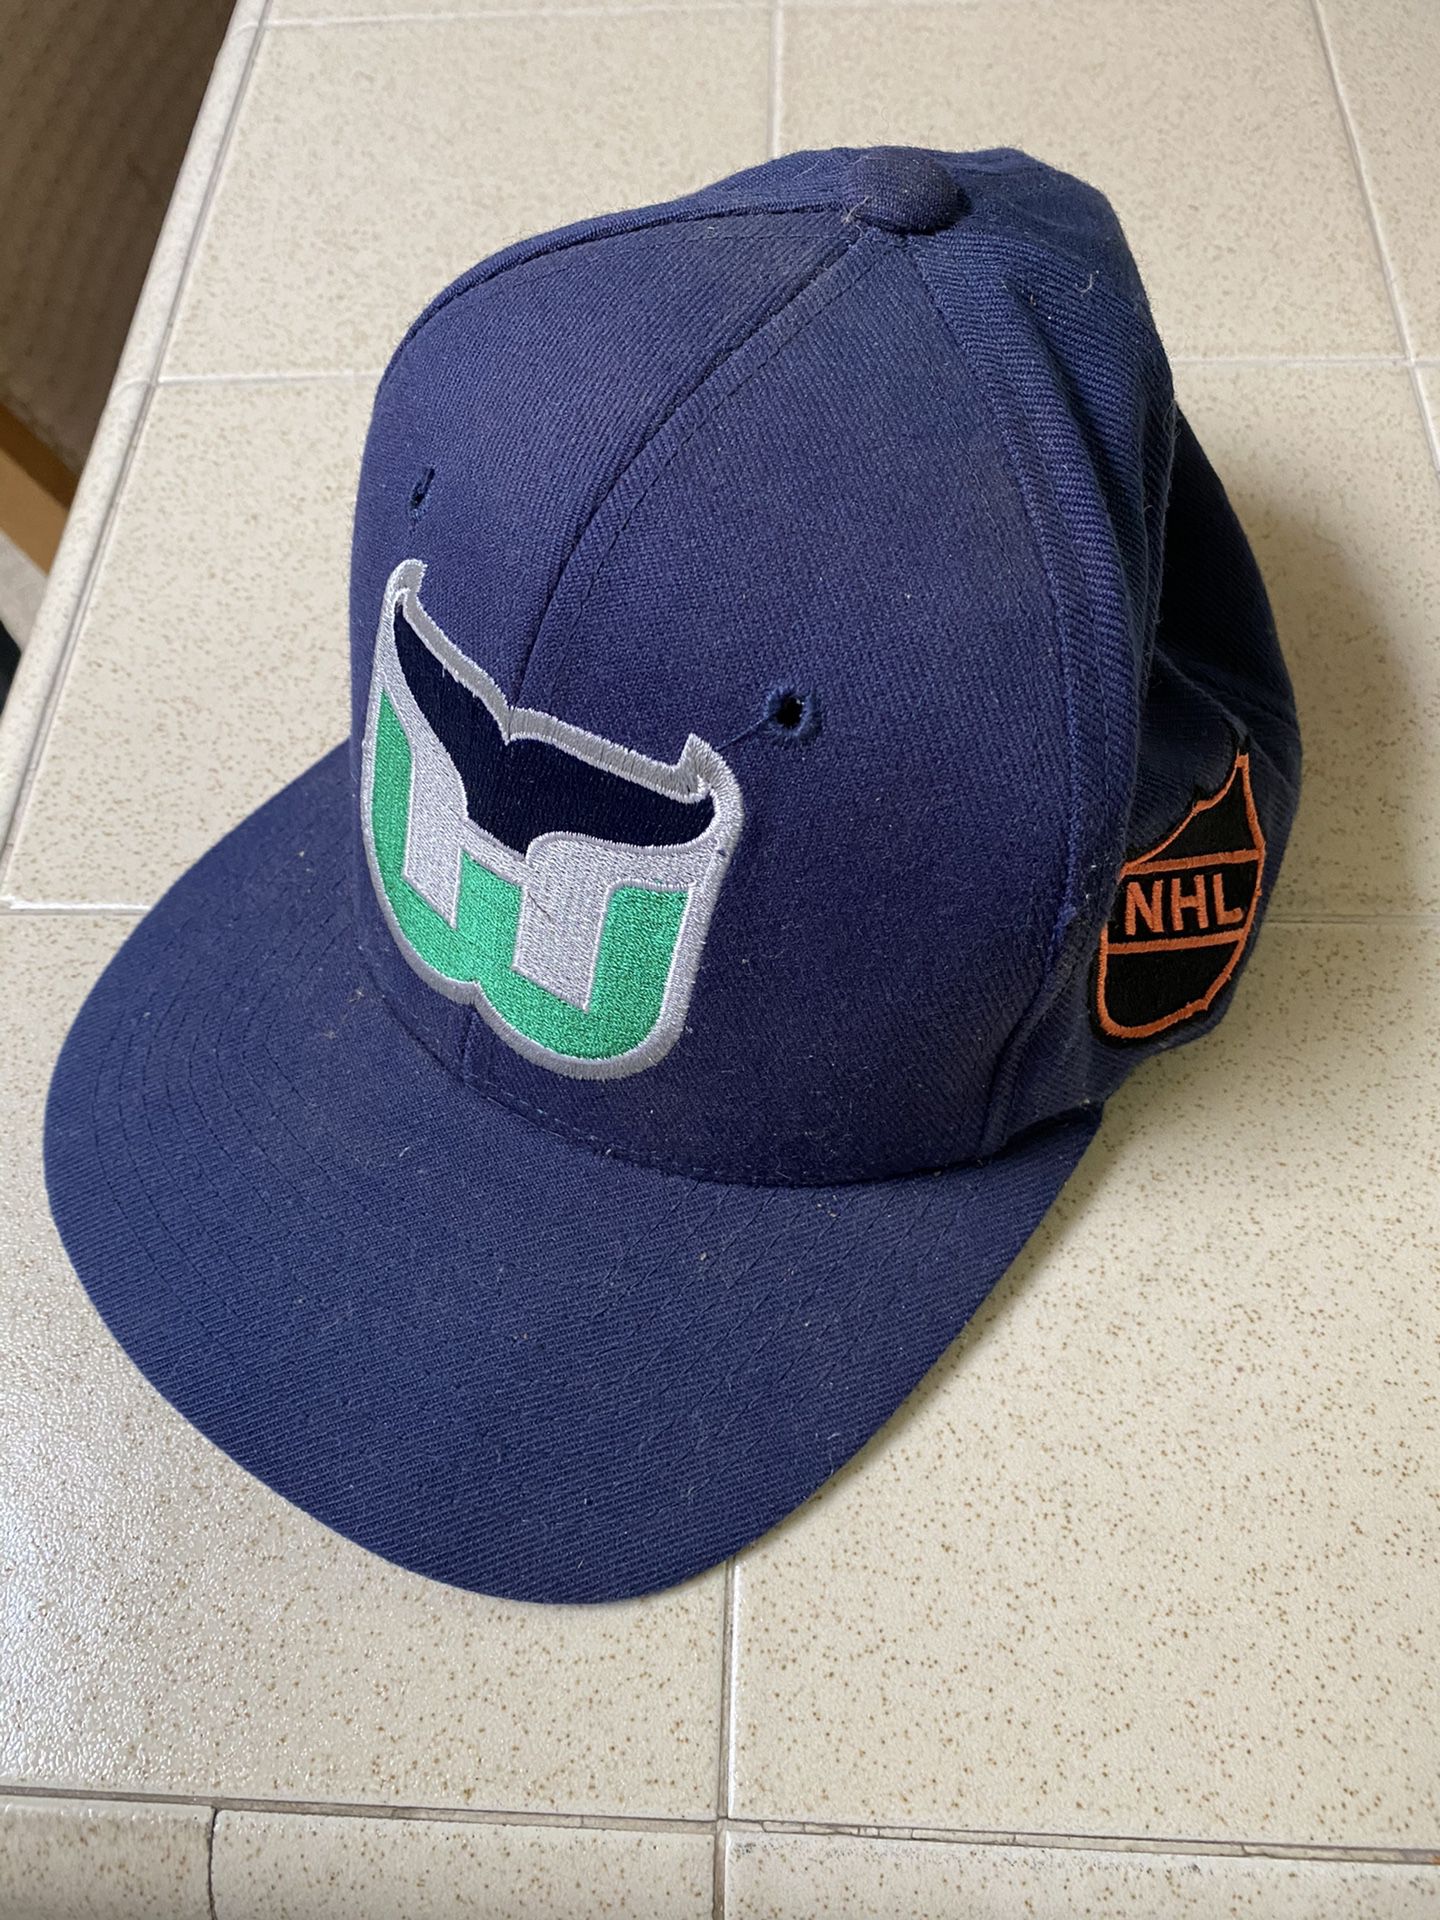 New NHL Whalers Team Hat